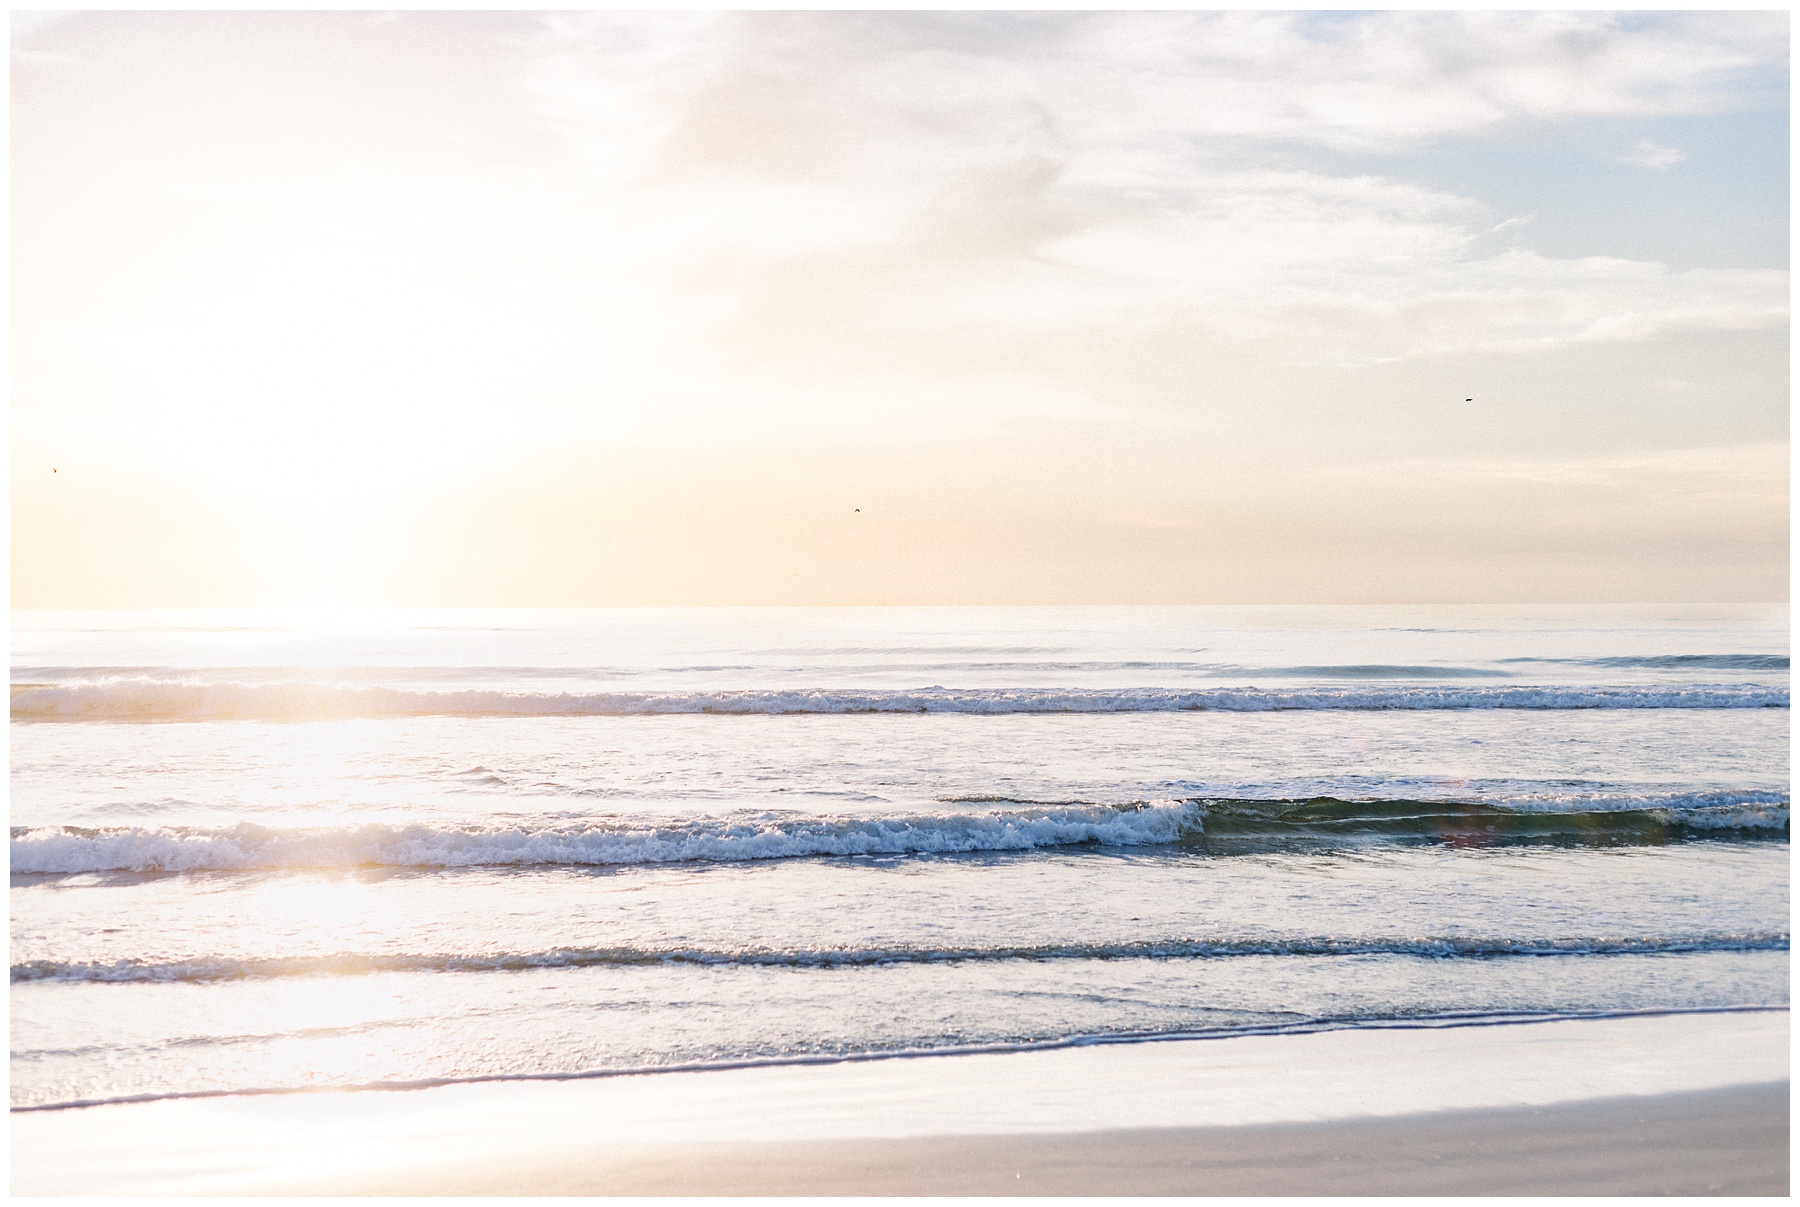 Daytona Beach Sunrise Photoshoot